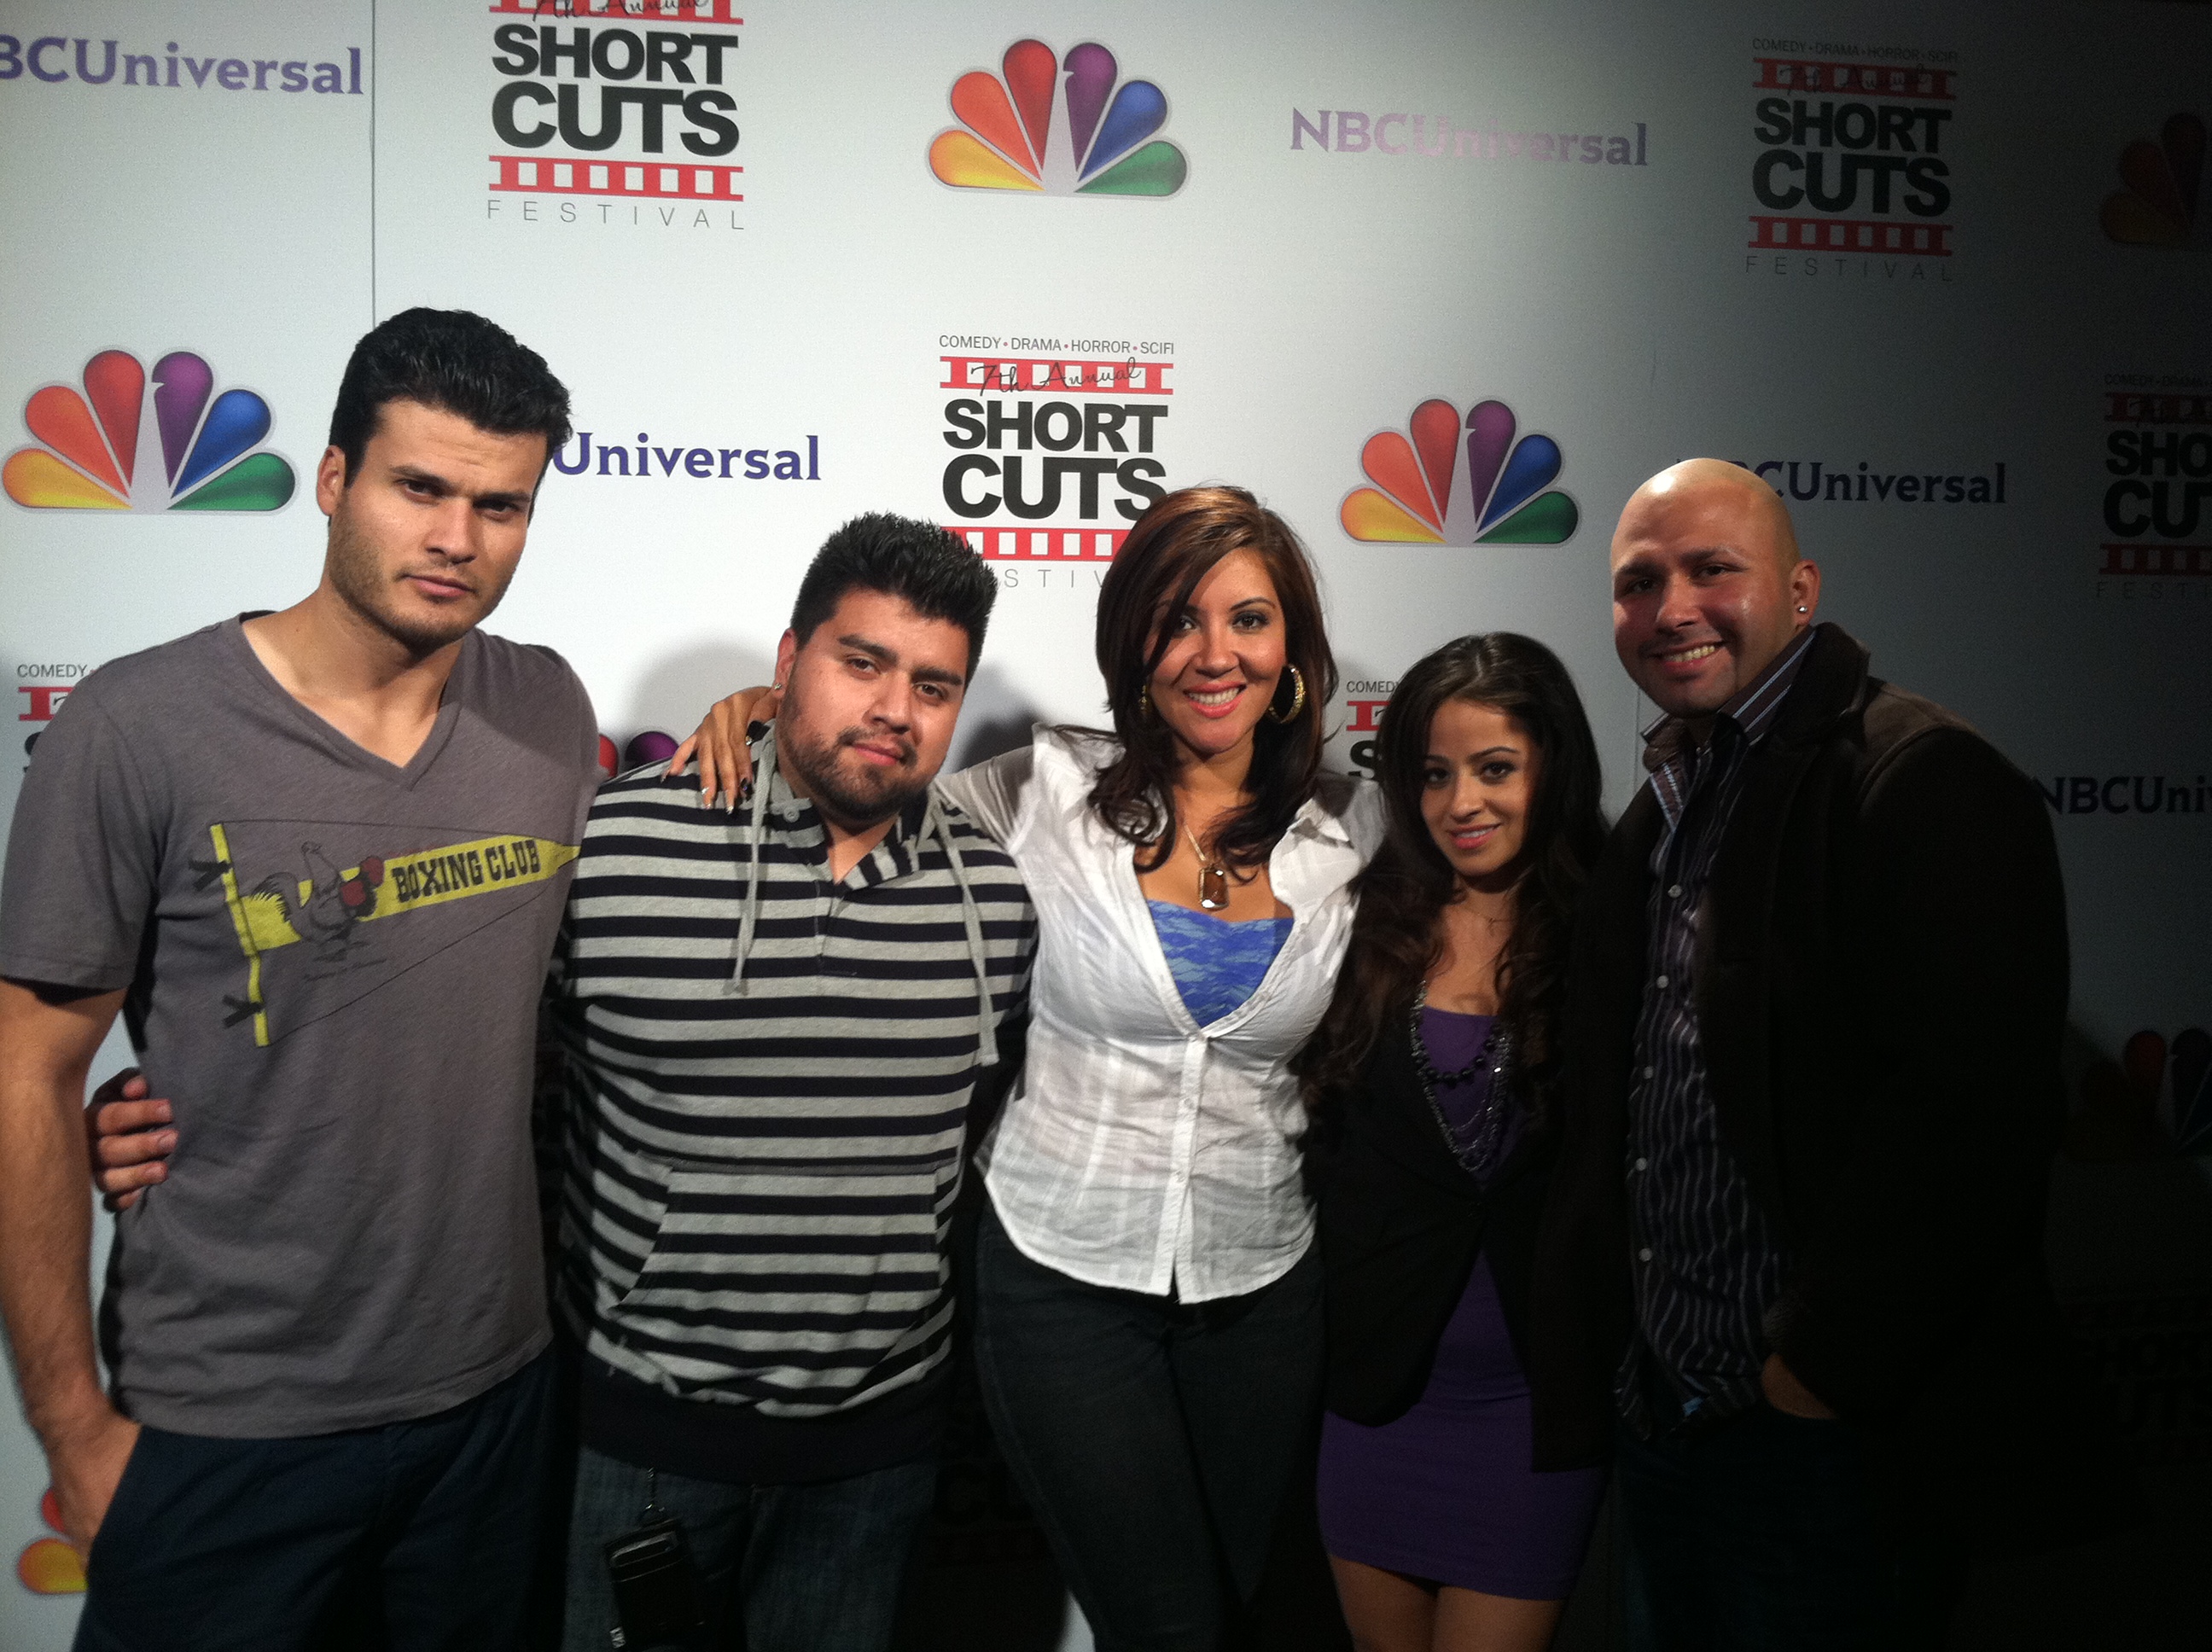 NBC Short Cuts Fest with RadioRoxy,DjZoe,Erica and Marisol Doblado.